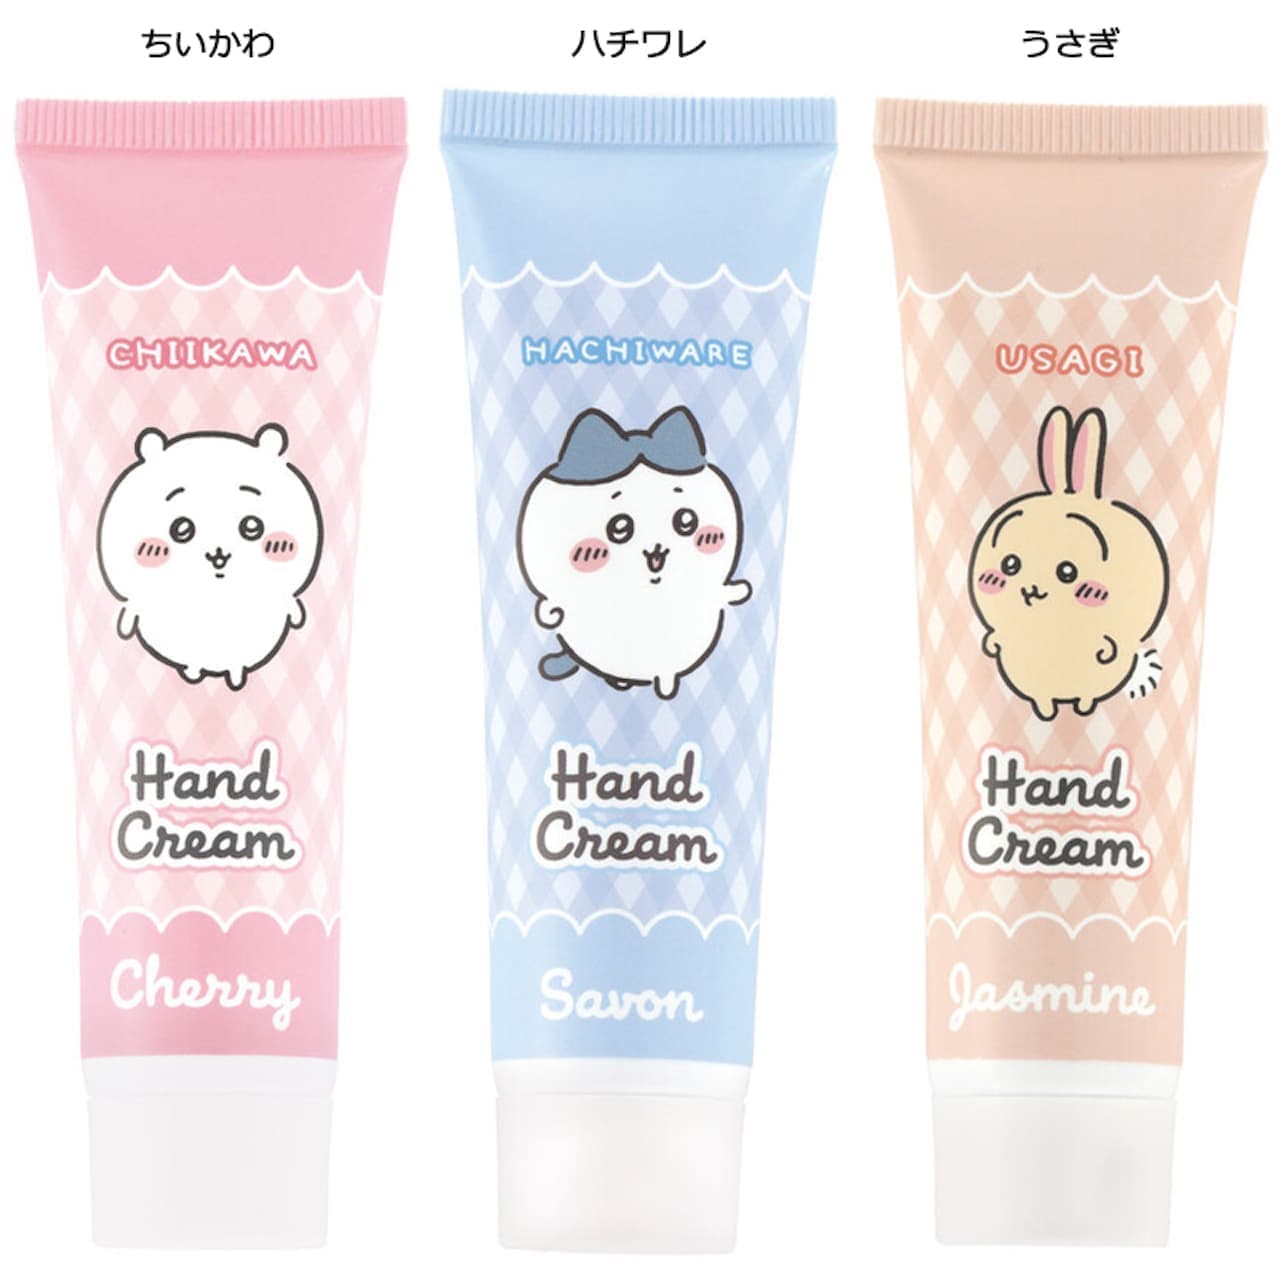 Lawson "Hand Cream